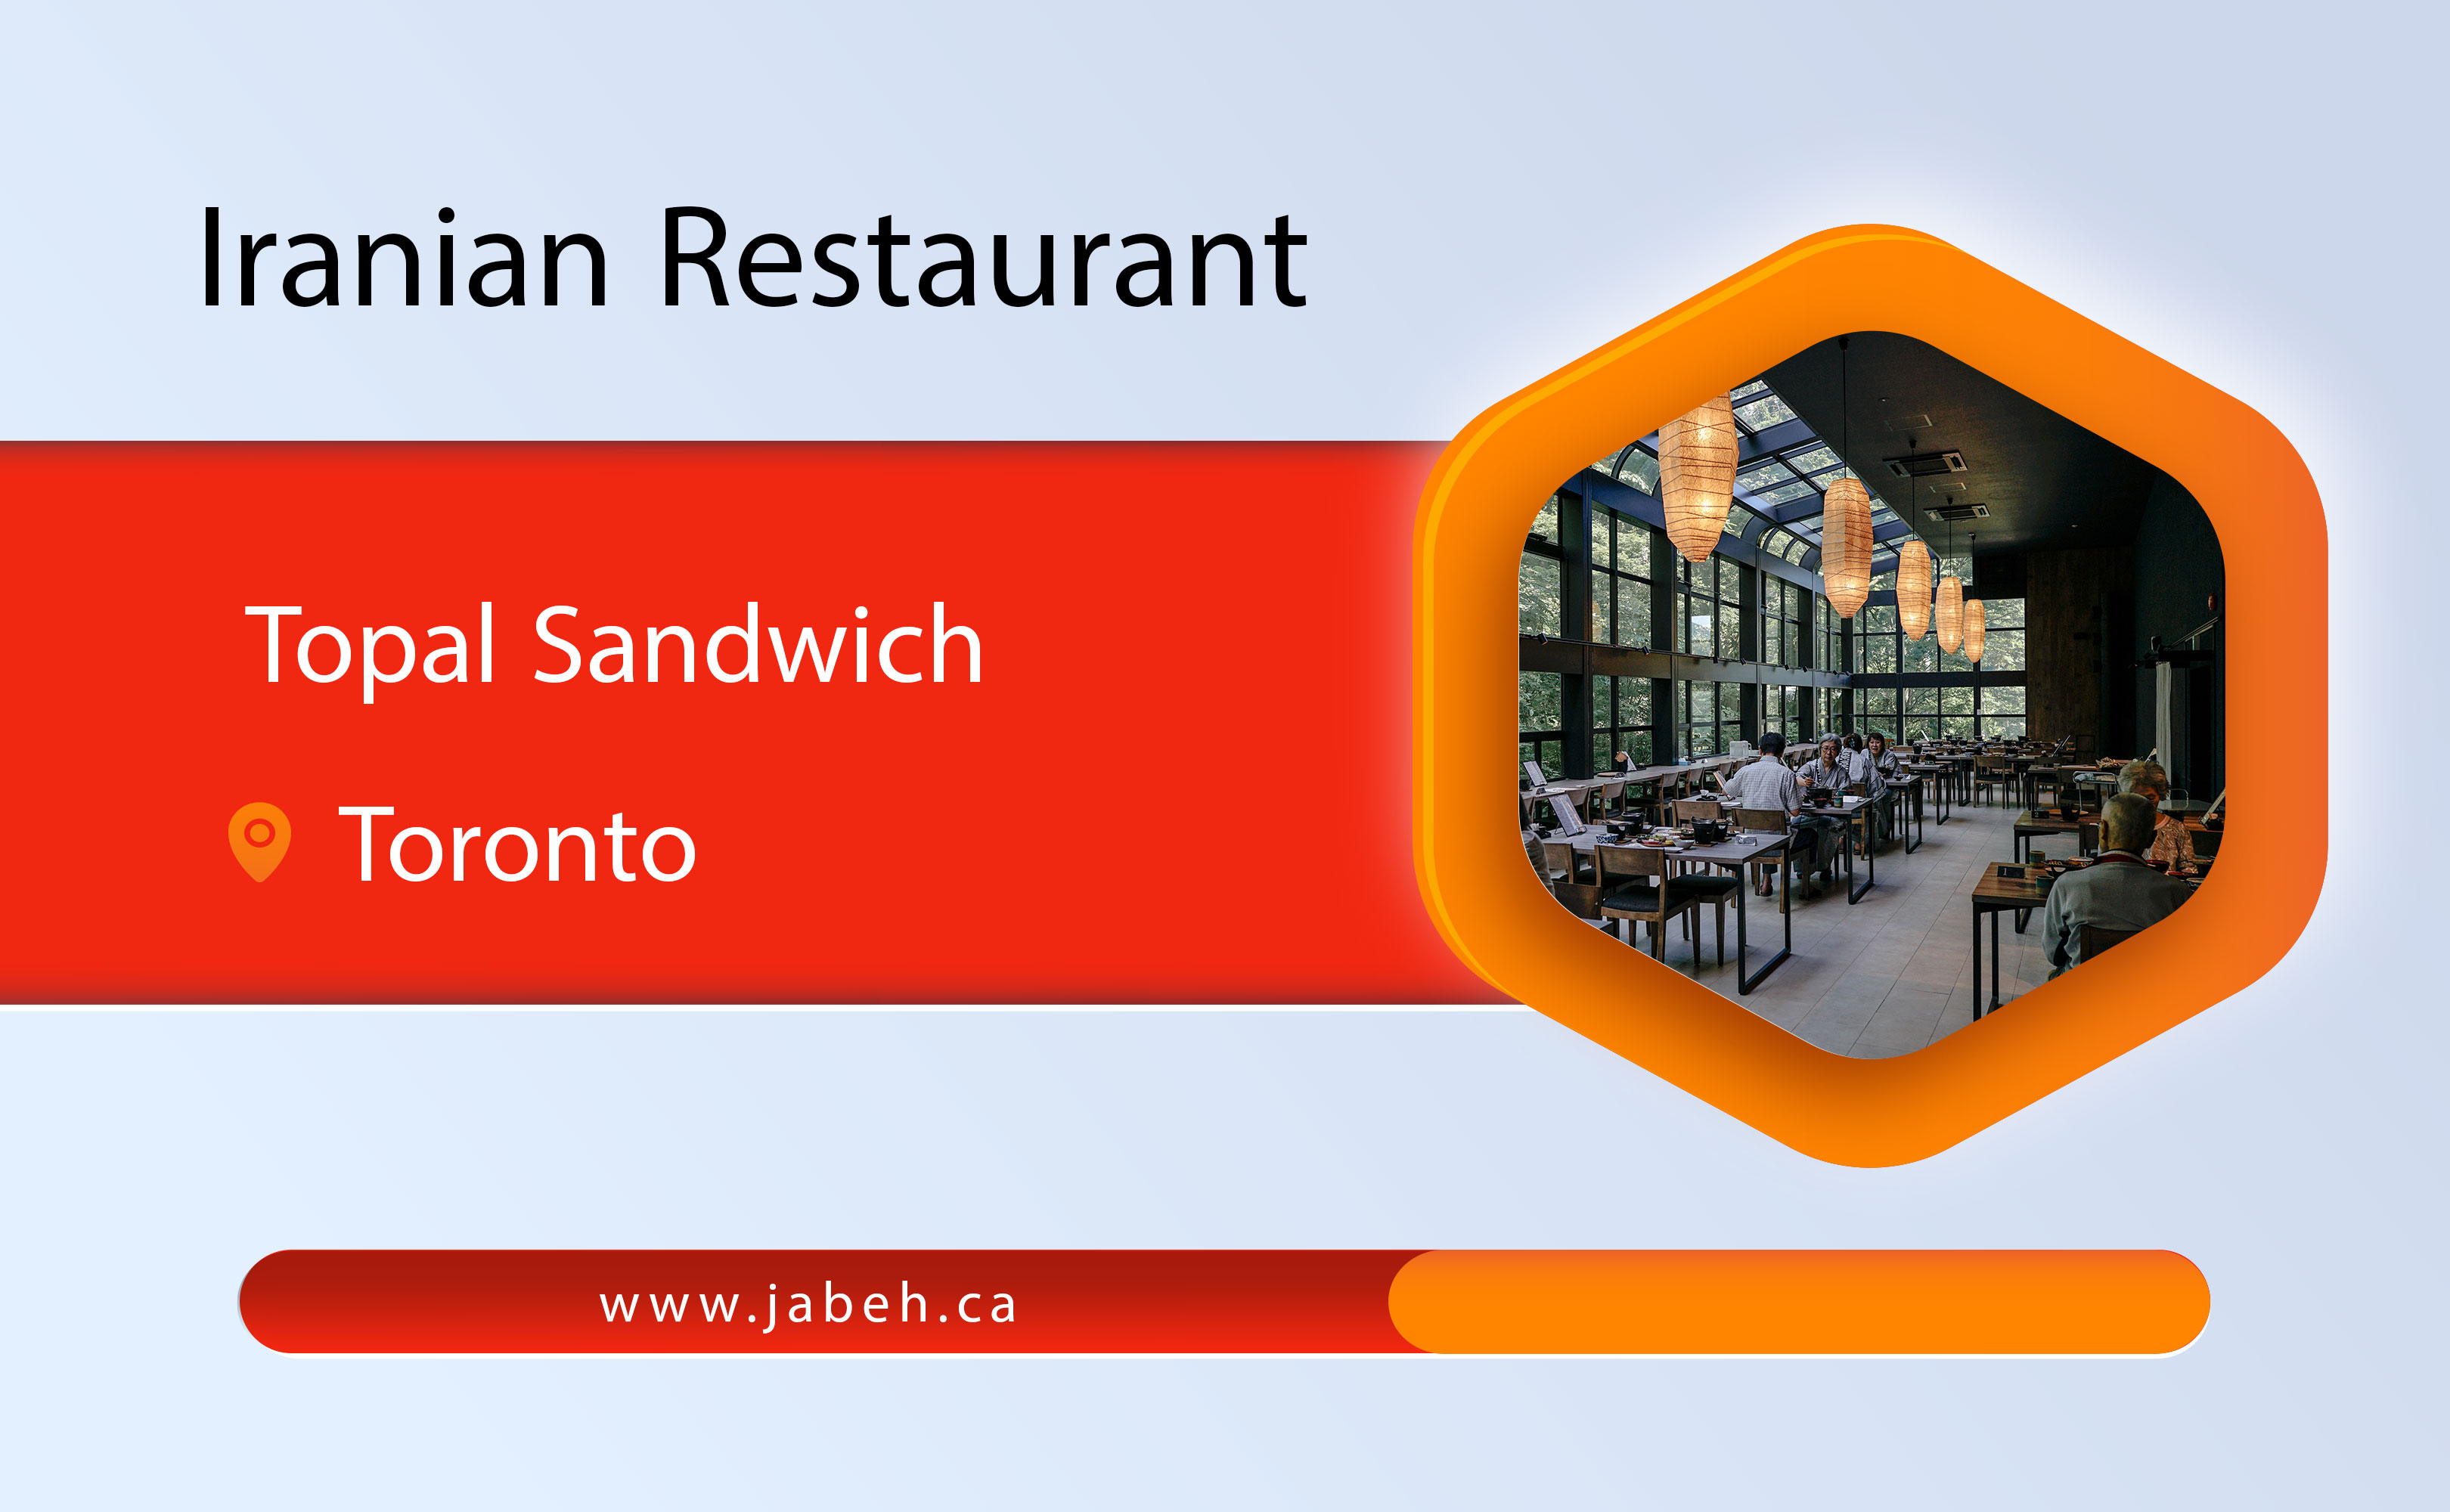 Topol Sandwich Irani Restaurant in Toronto